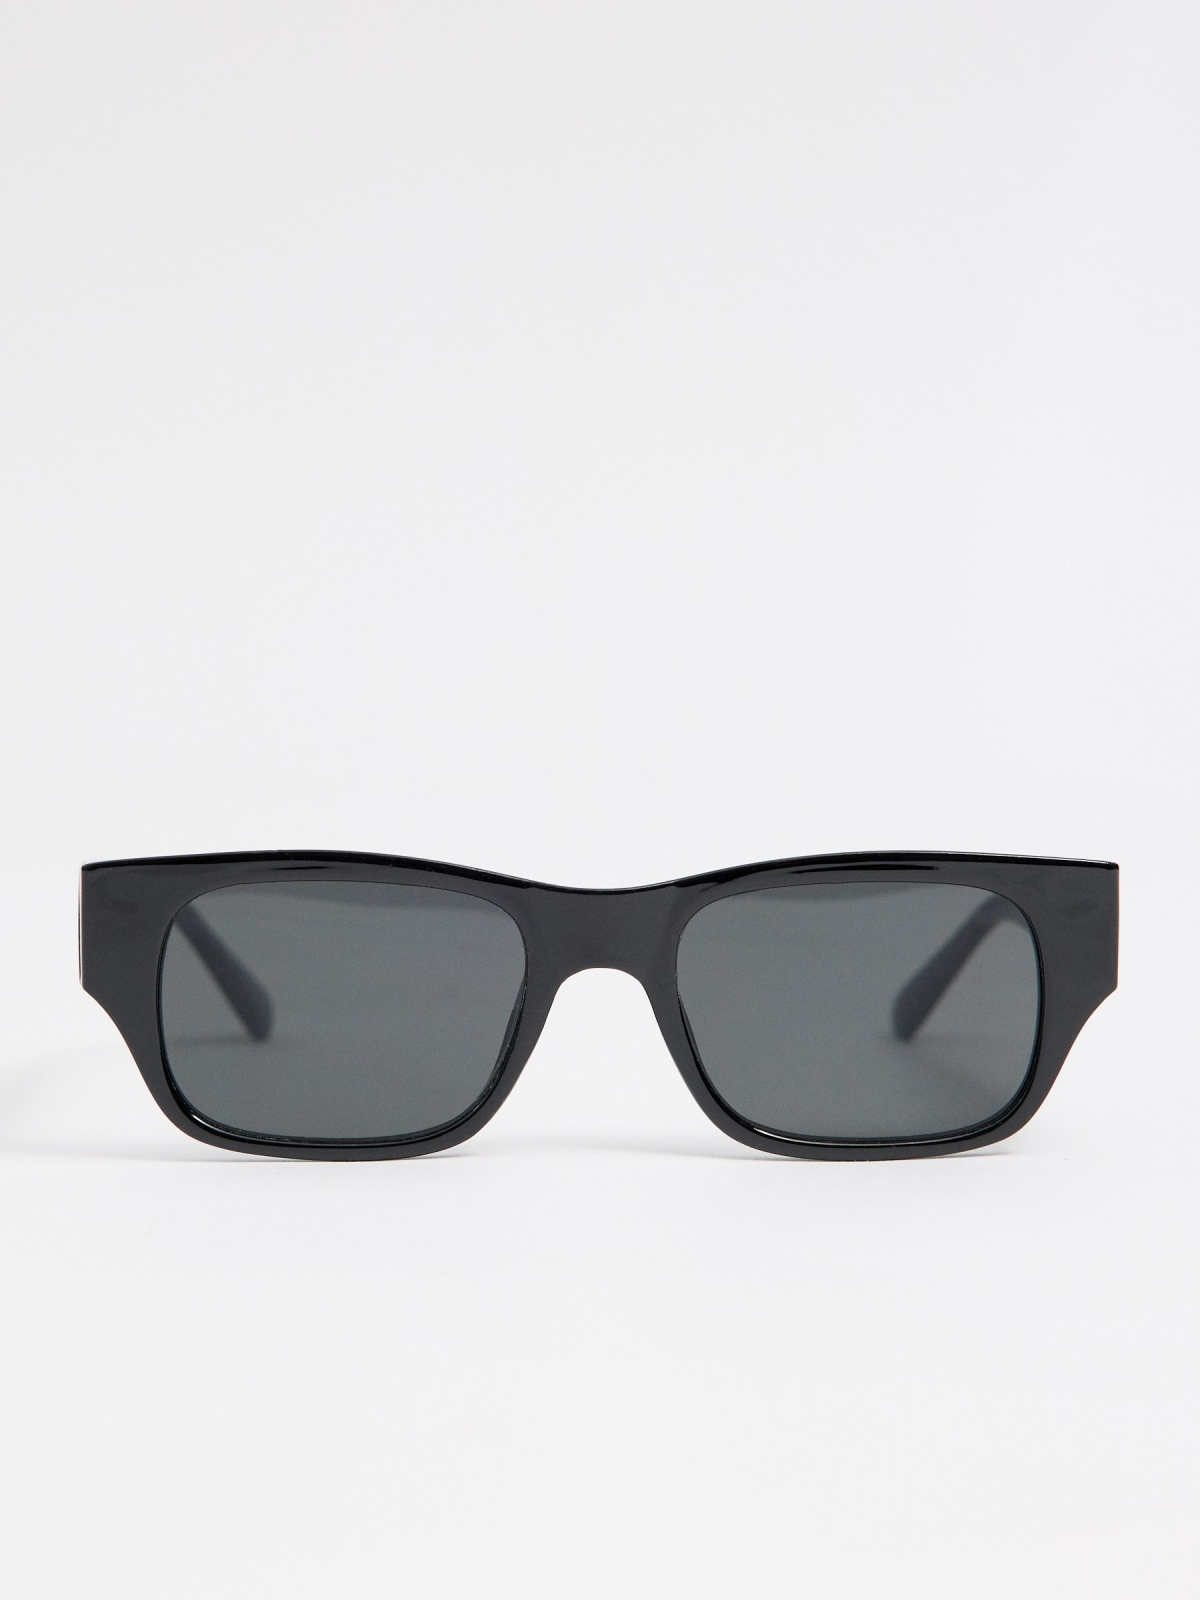 Black frame sunglasses black